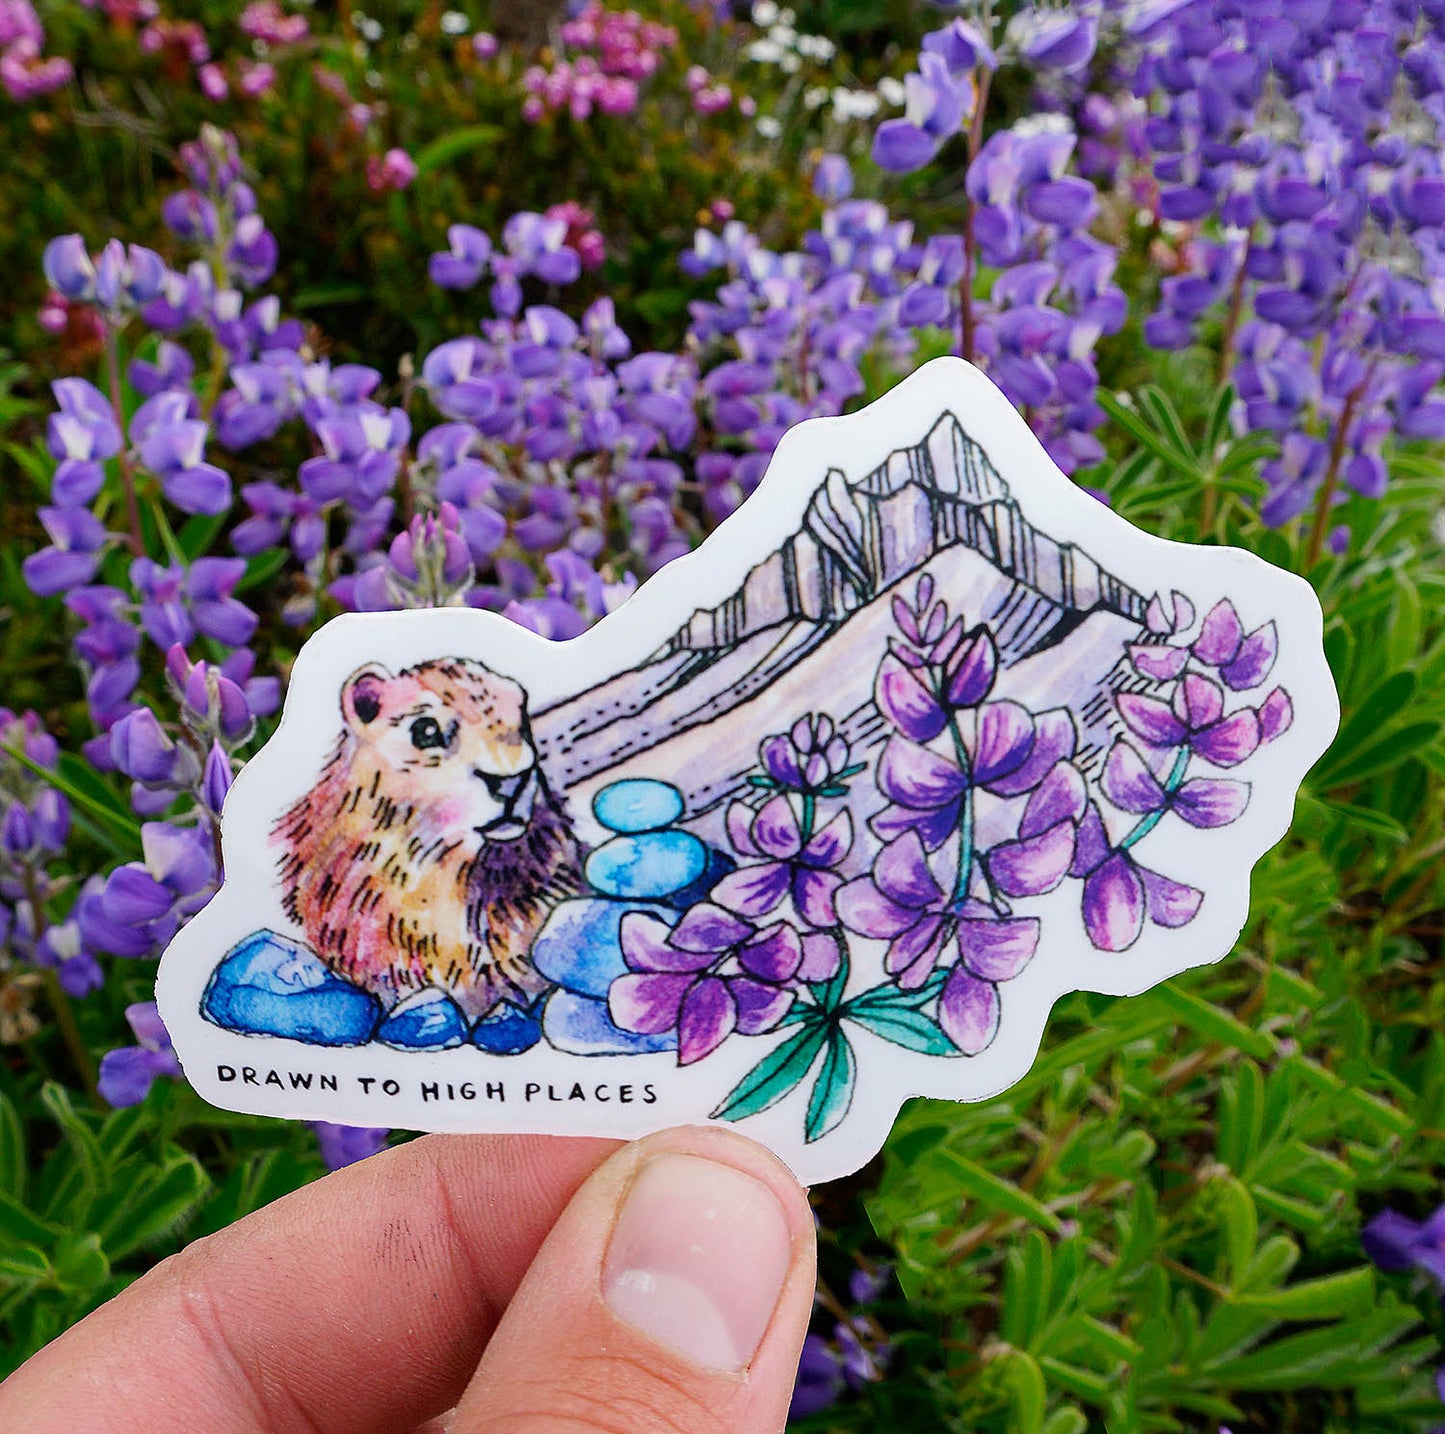 Marmot Sticker